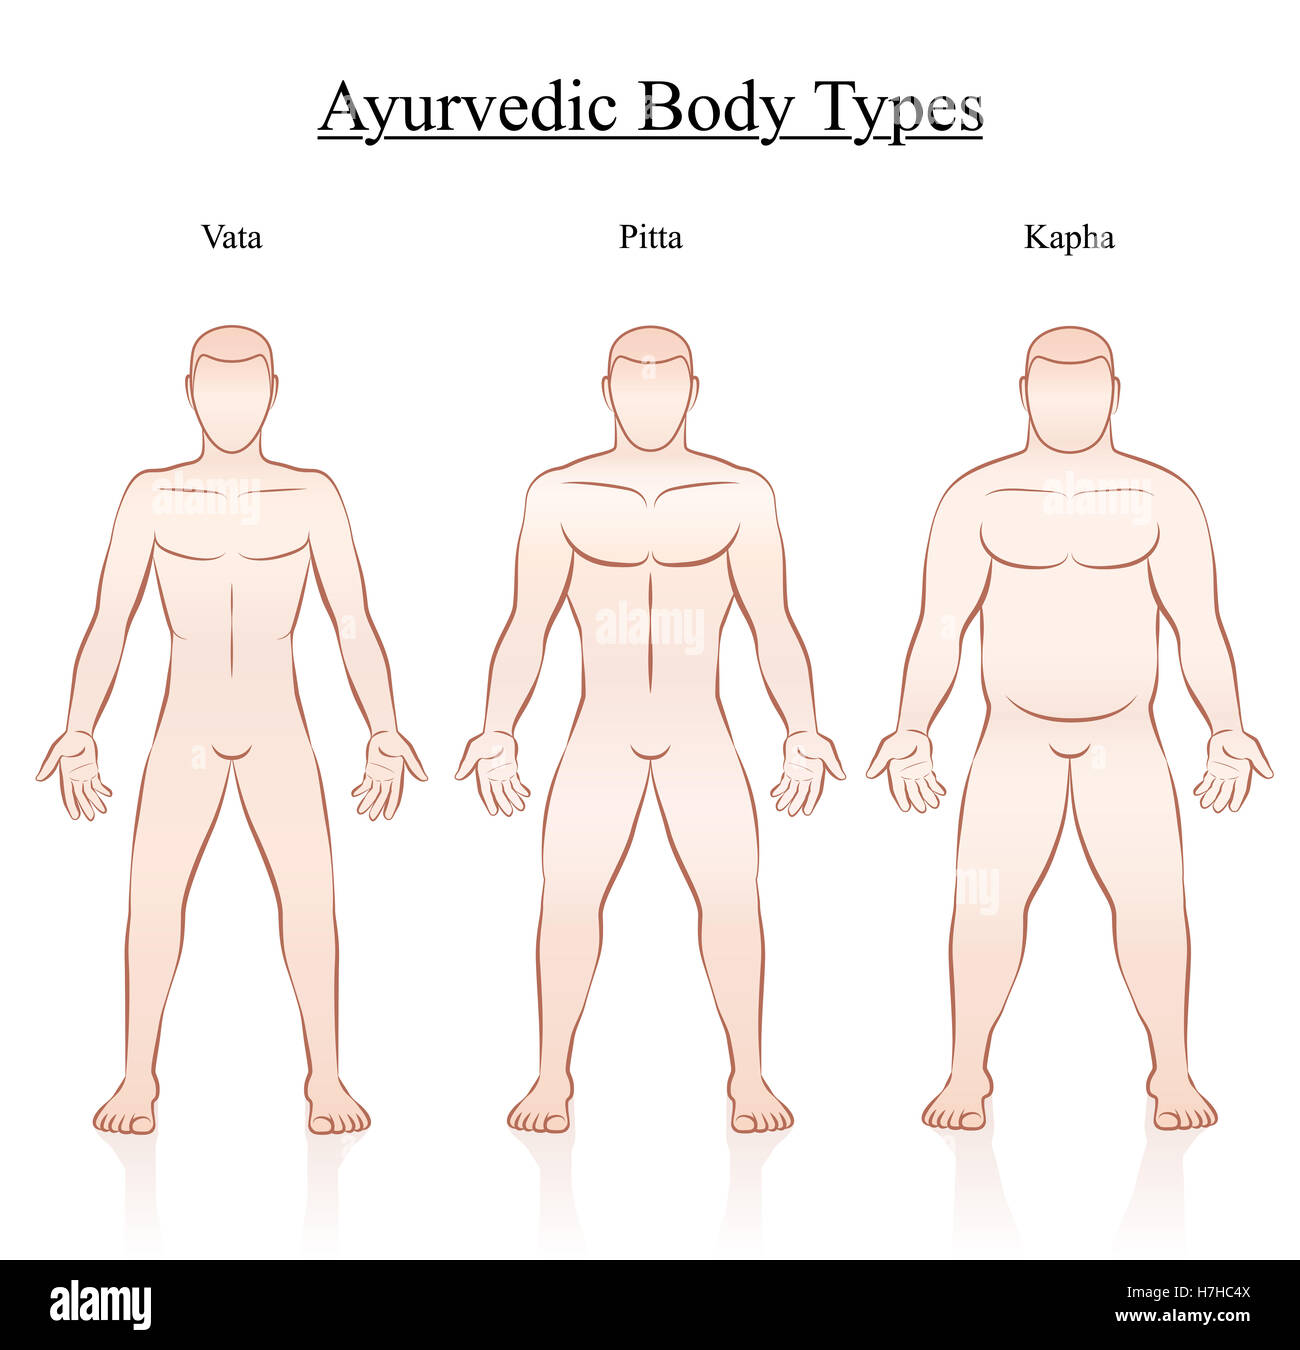 Ayurvedic body constitution types - vata, pitta, kapha. Outline illustration of three men with different anatomy. Stock Photo